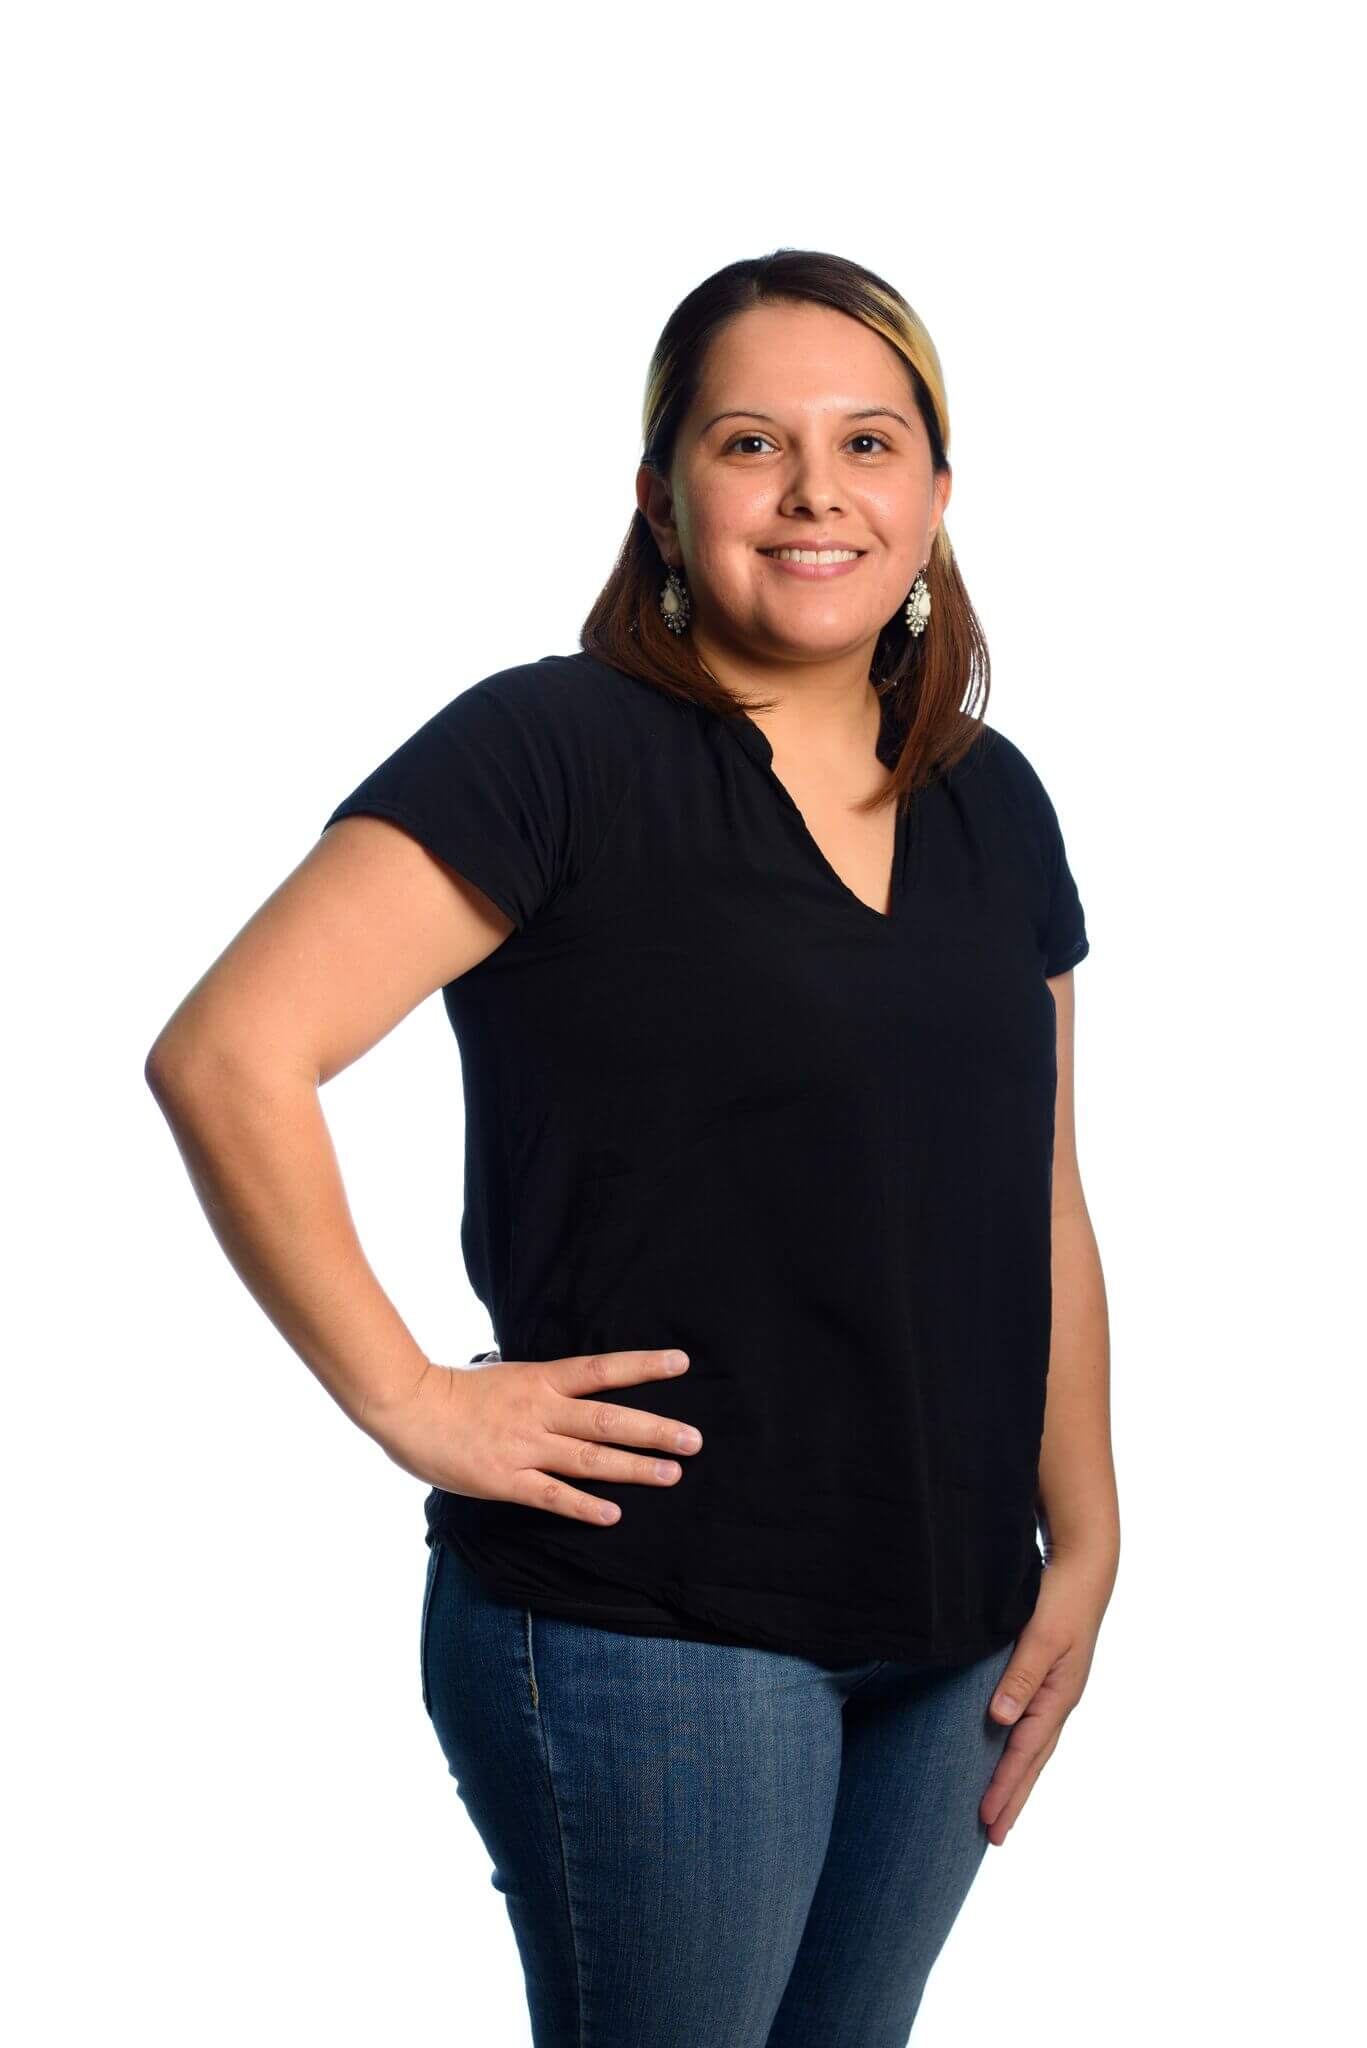 Janie Reyes – Patient Insurance Coordinator